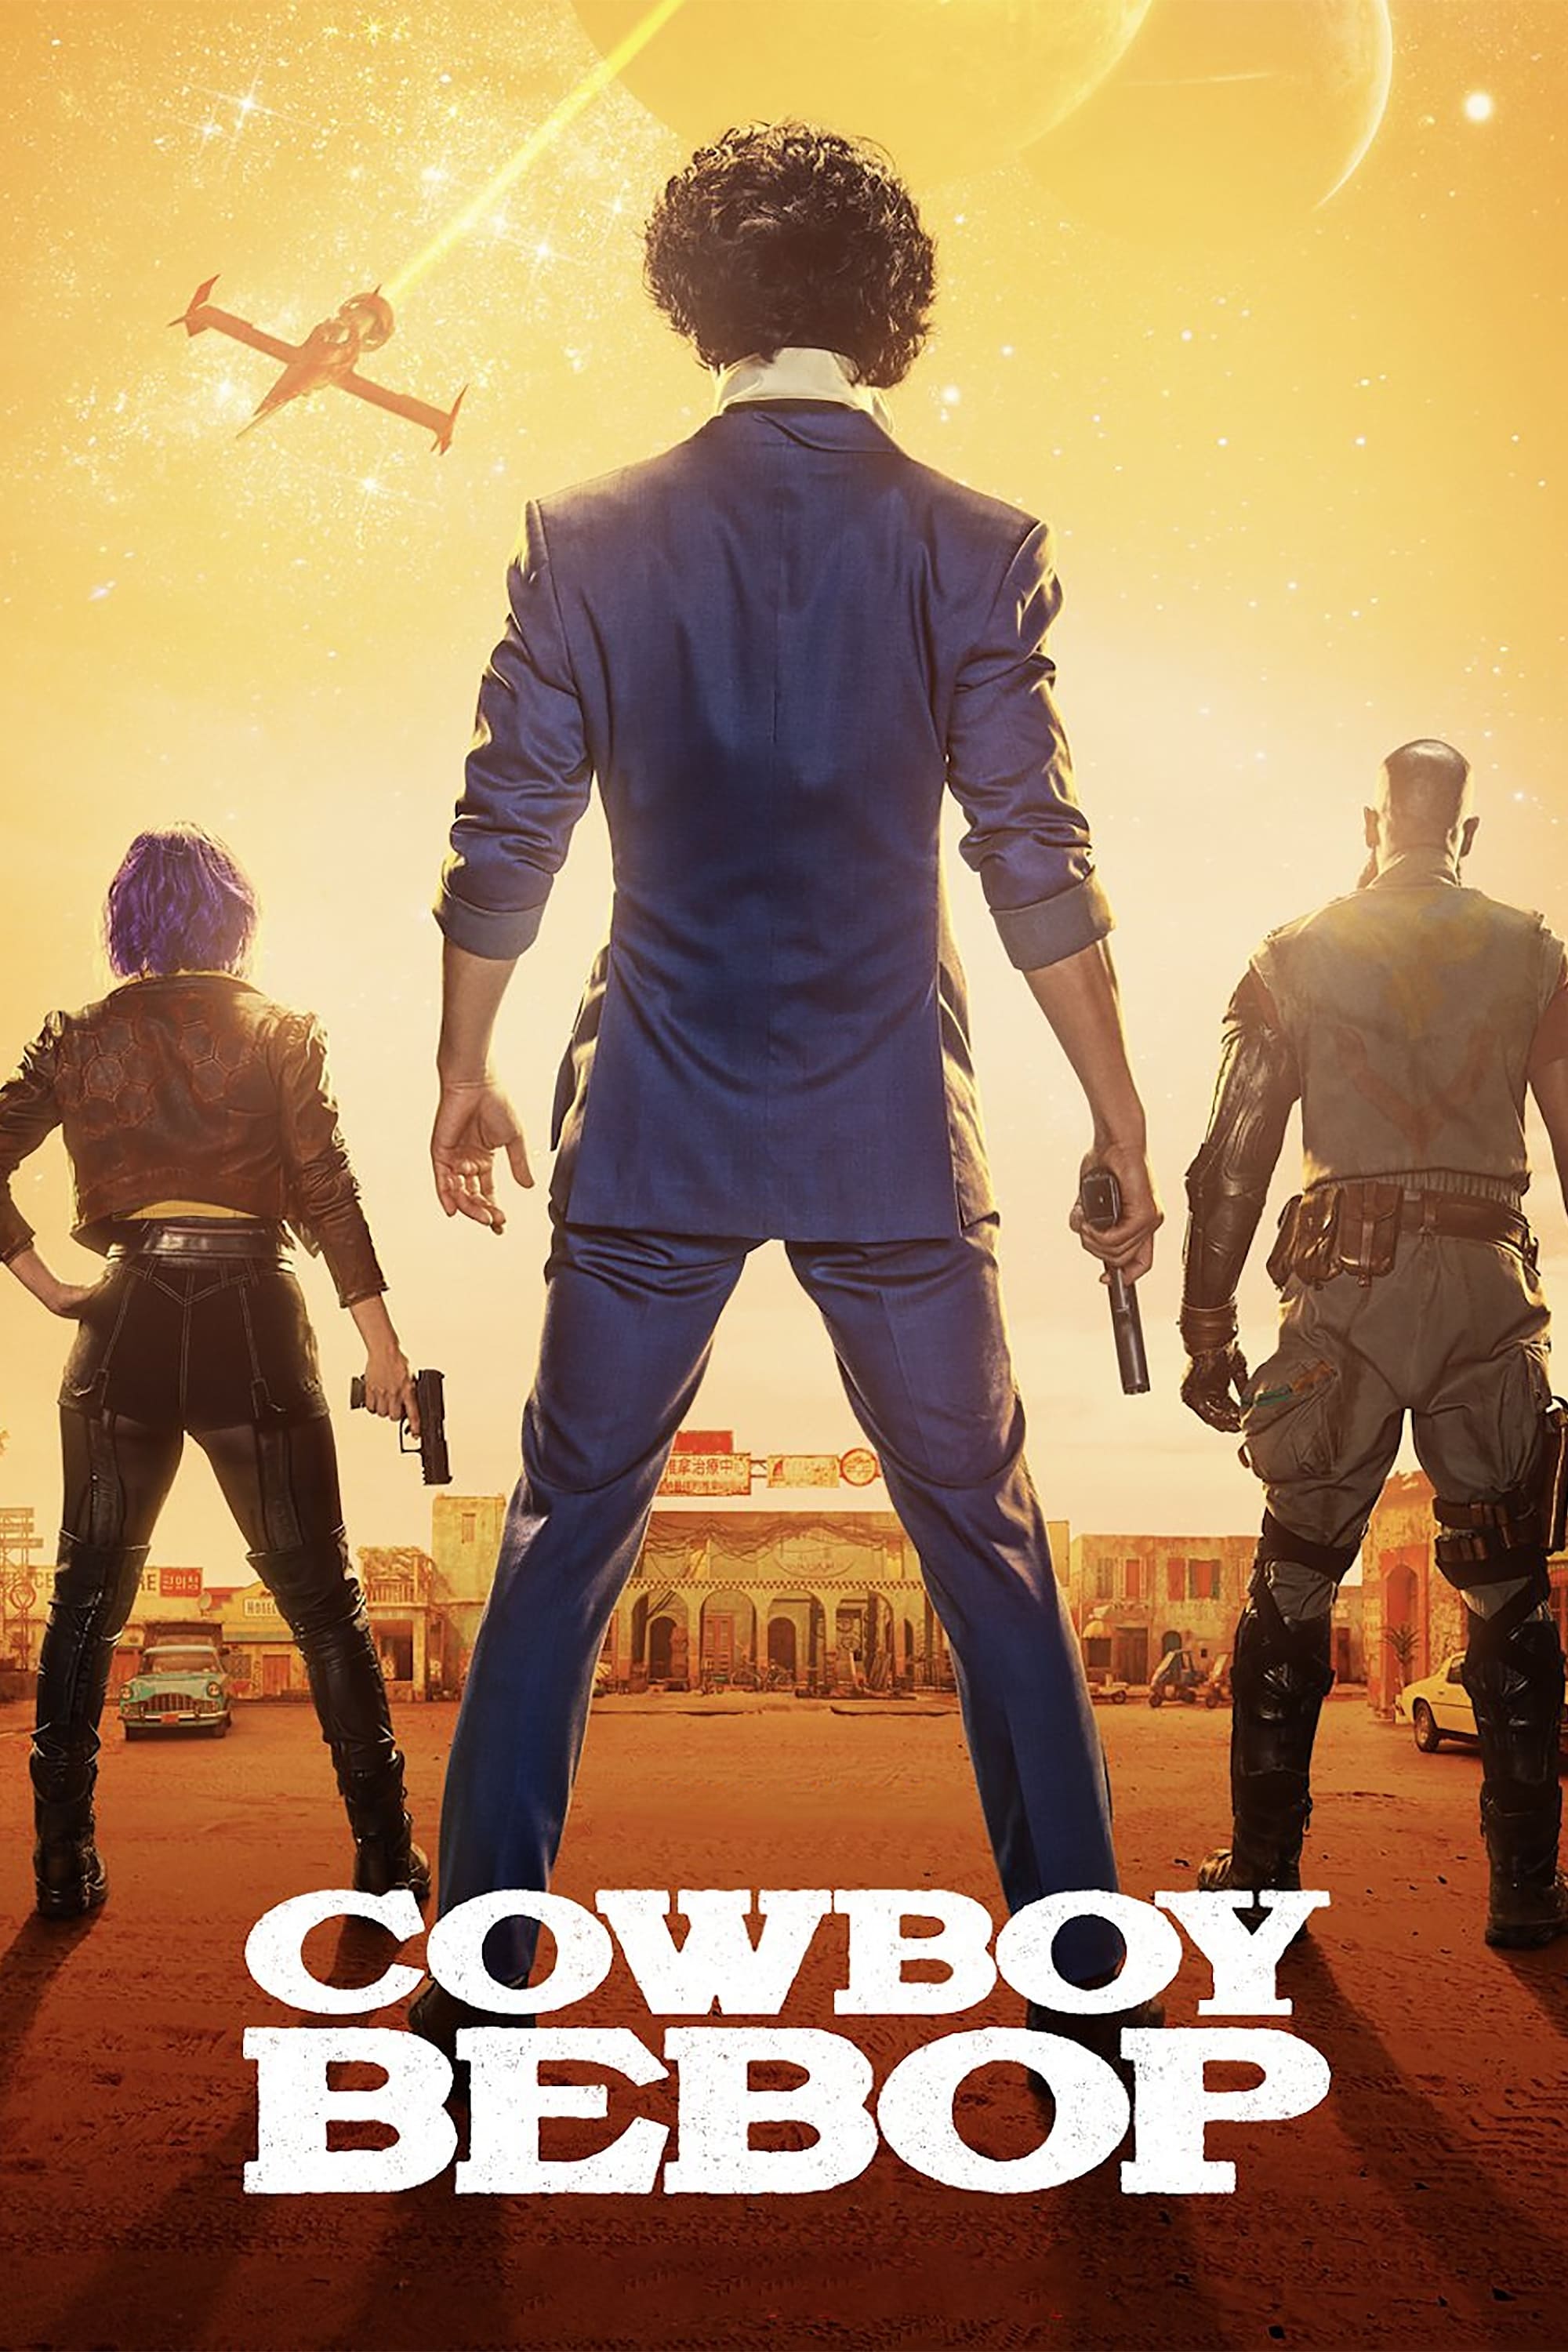 Cowboy Bebop TV Shows About Space